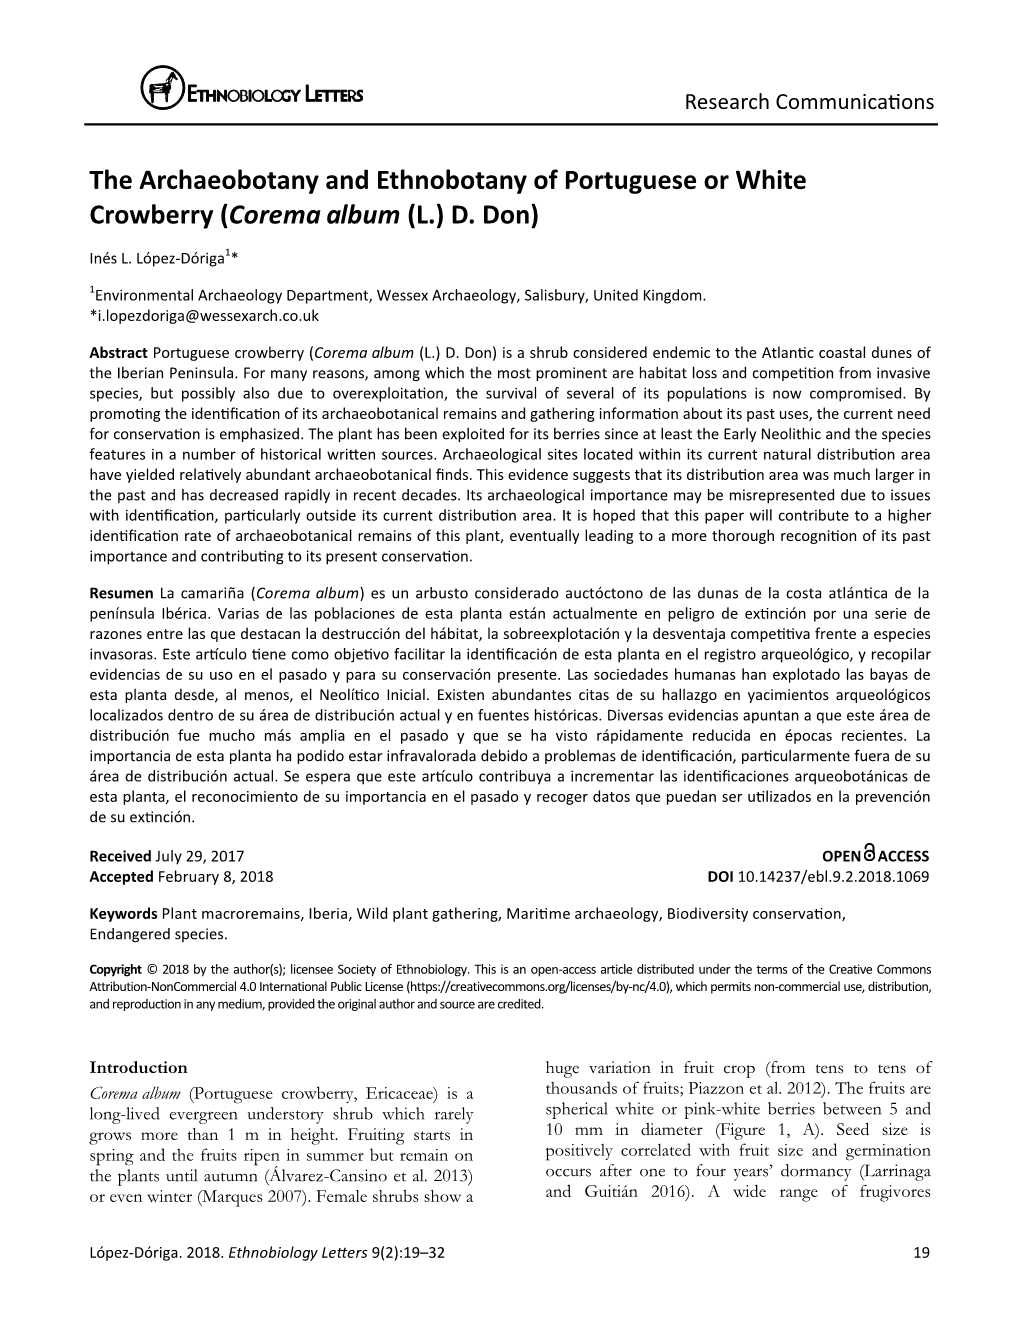 The Archaeobotany and Ethnobotany of Portuguese Or White Crowberry (Corema Album (L.) D